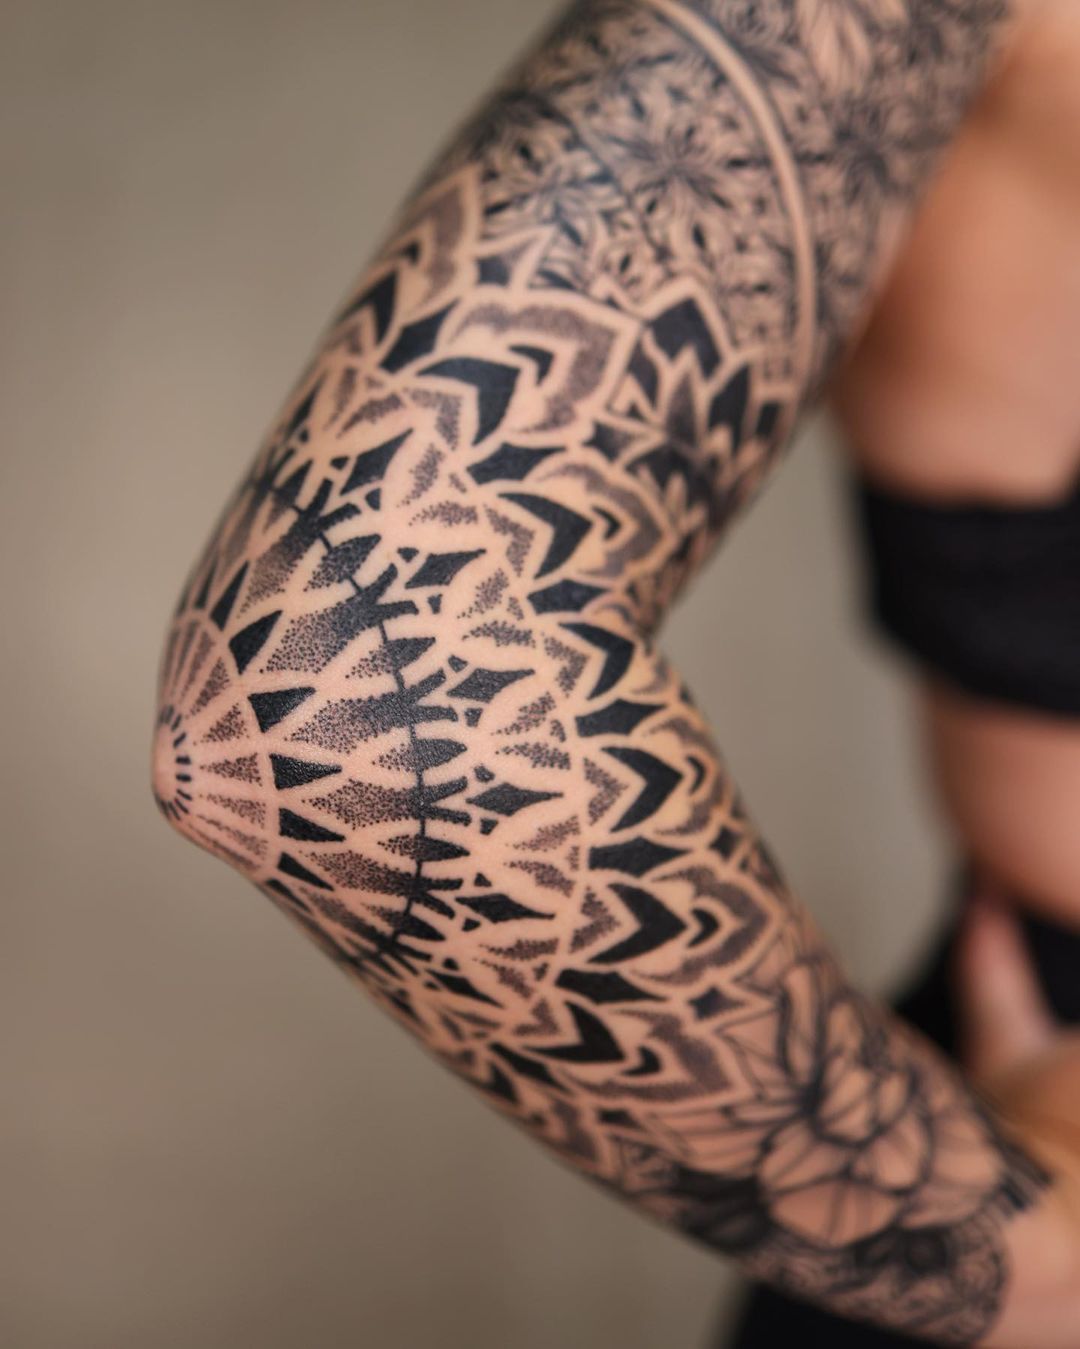 Dotwork tattoo design by fleur.tattoos